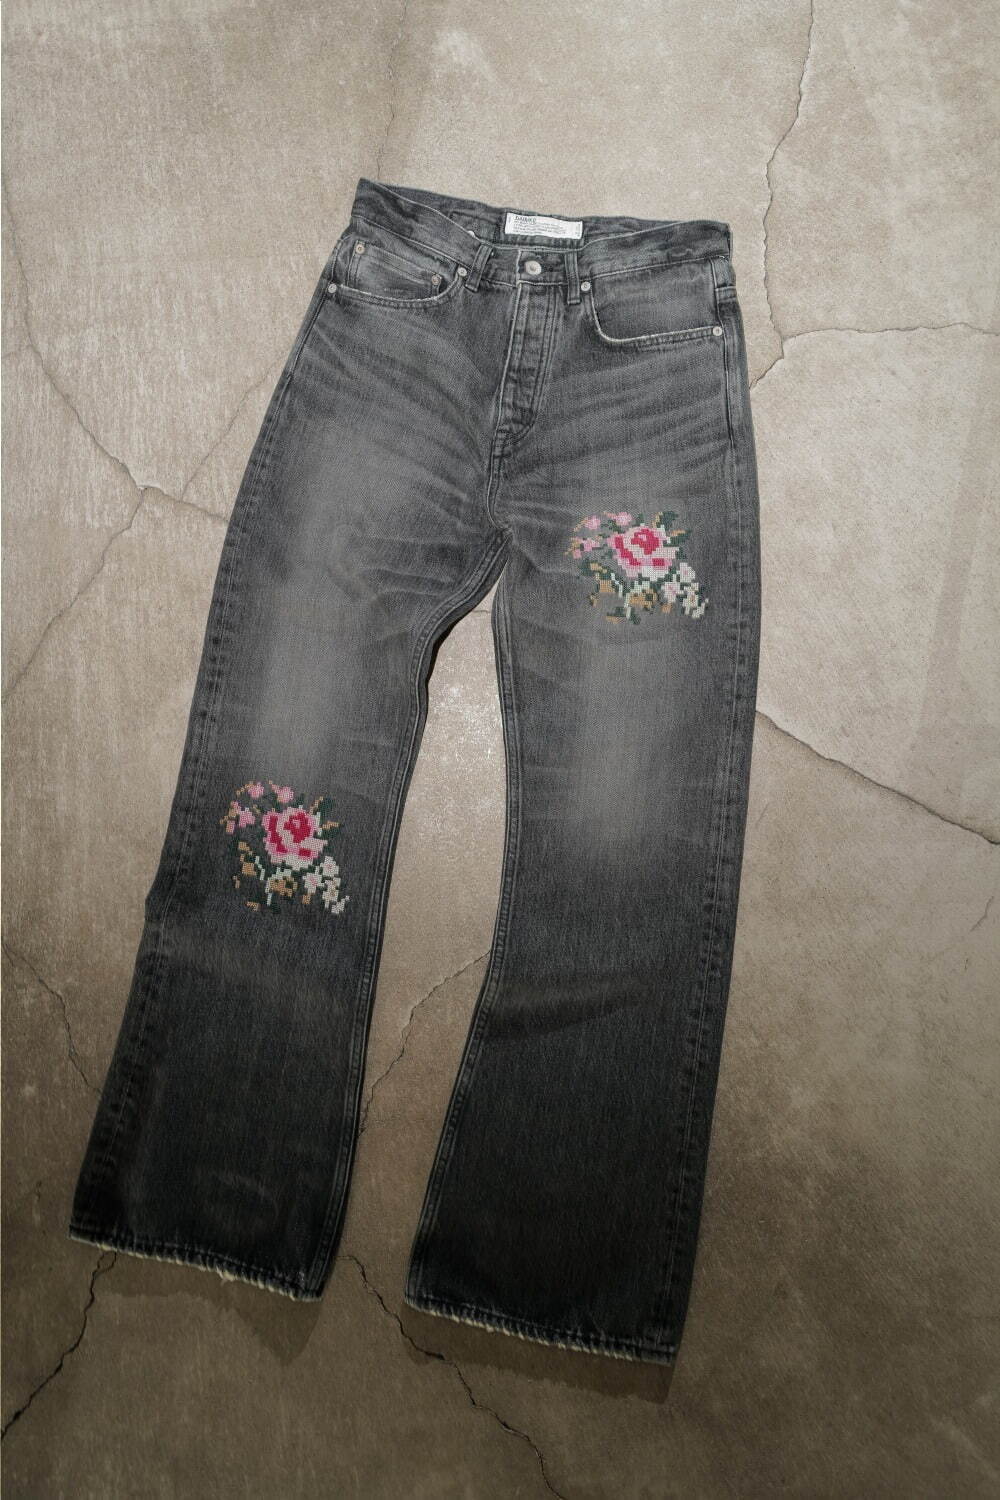 Flower Cross Embroidery Black Flare Pants(27、29) 57,200円